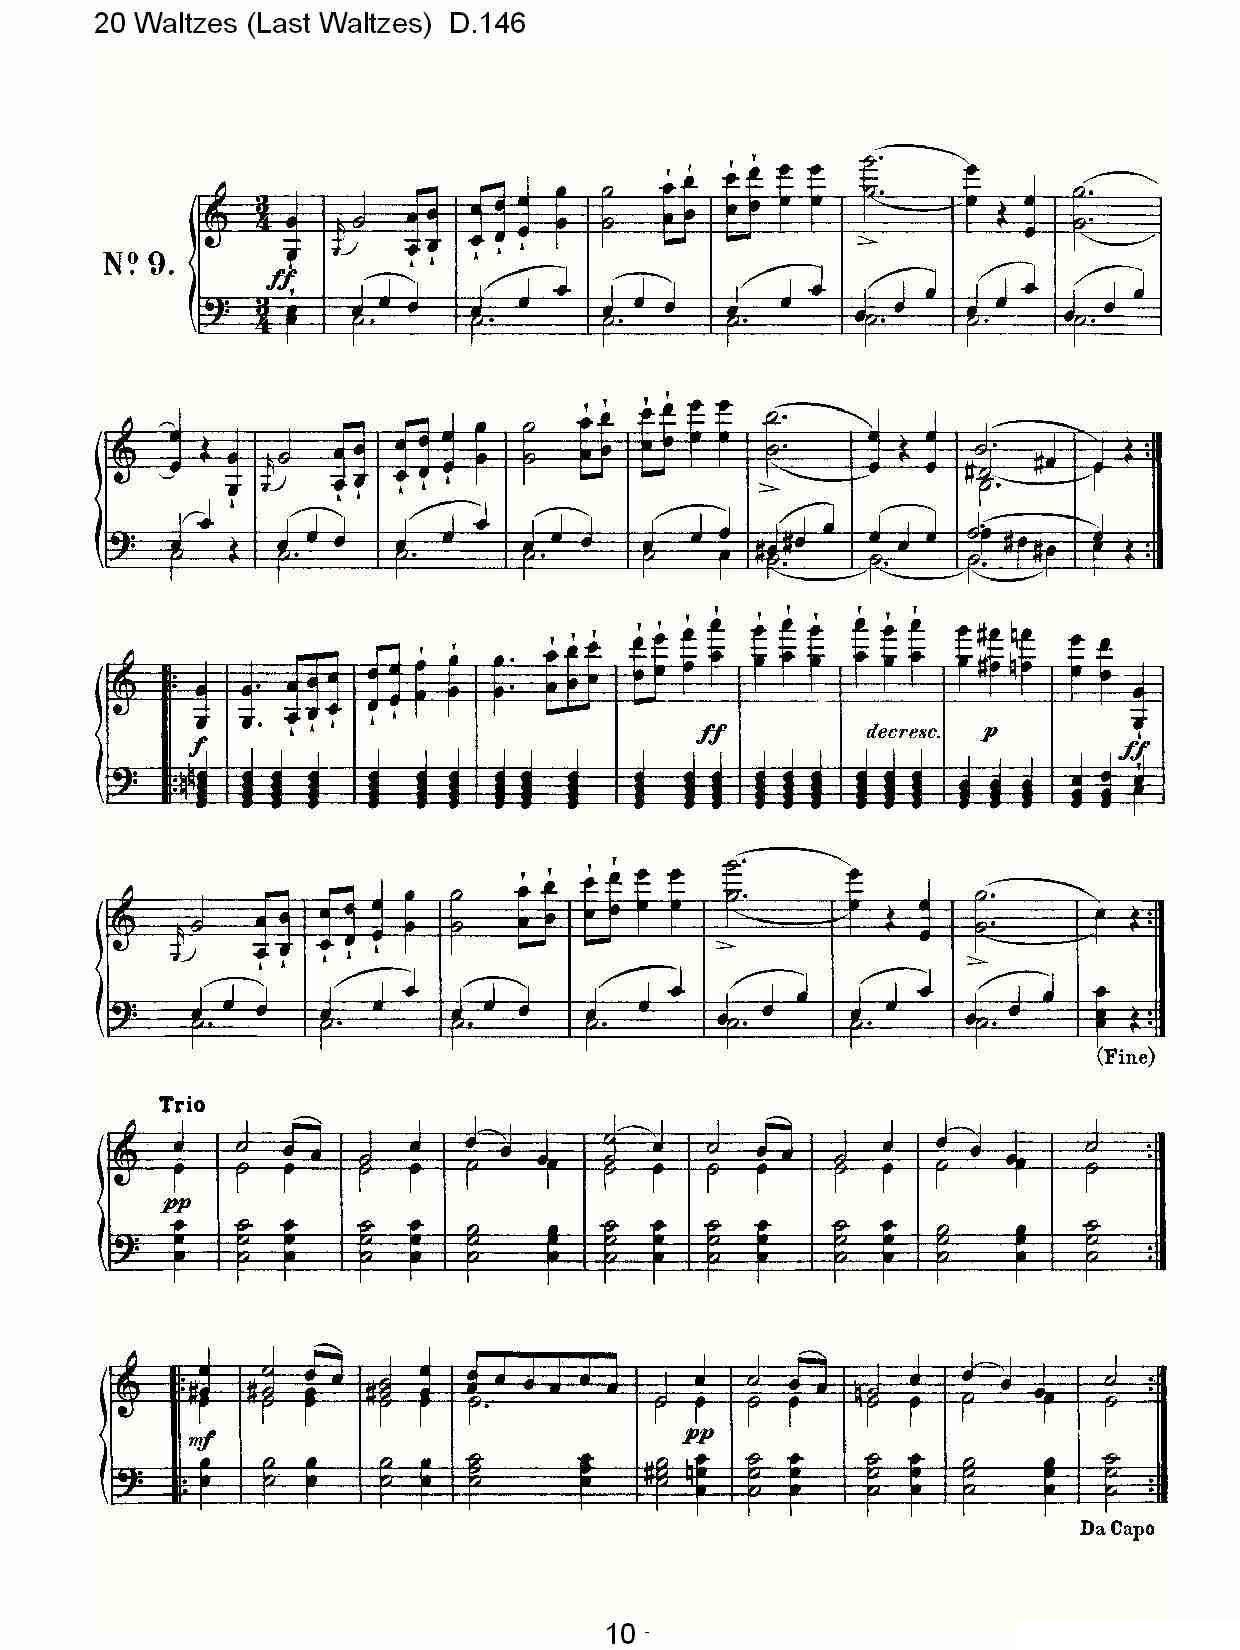 20 Waltzes（Last Waltzes) D.14）钢琴曲谱（图10）